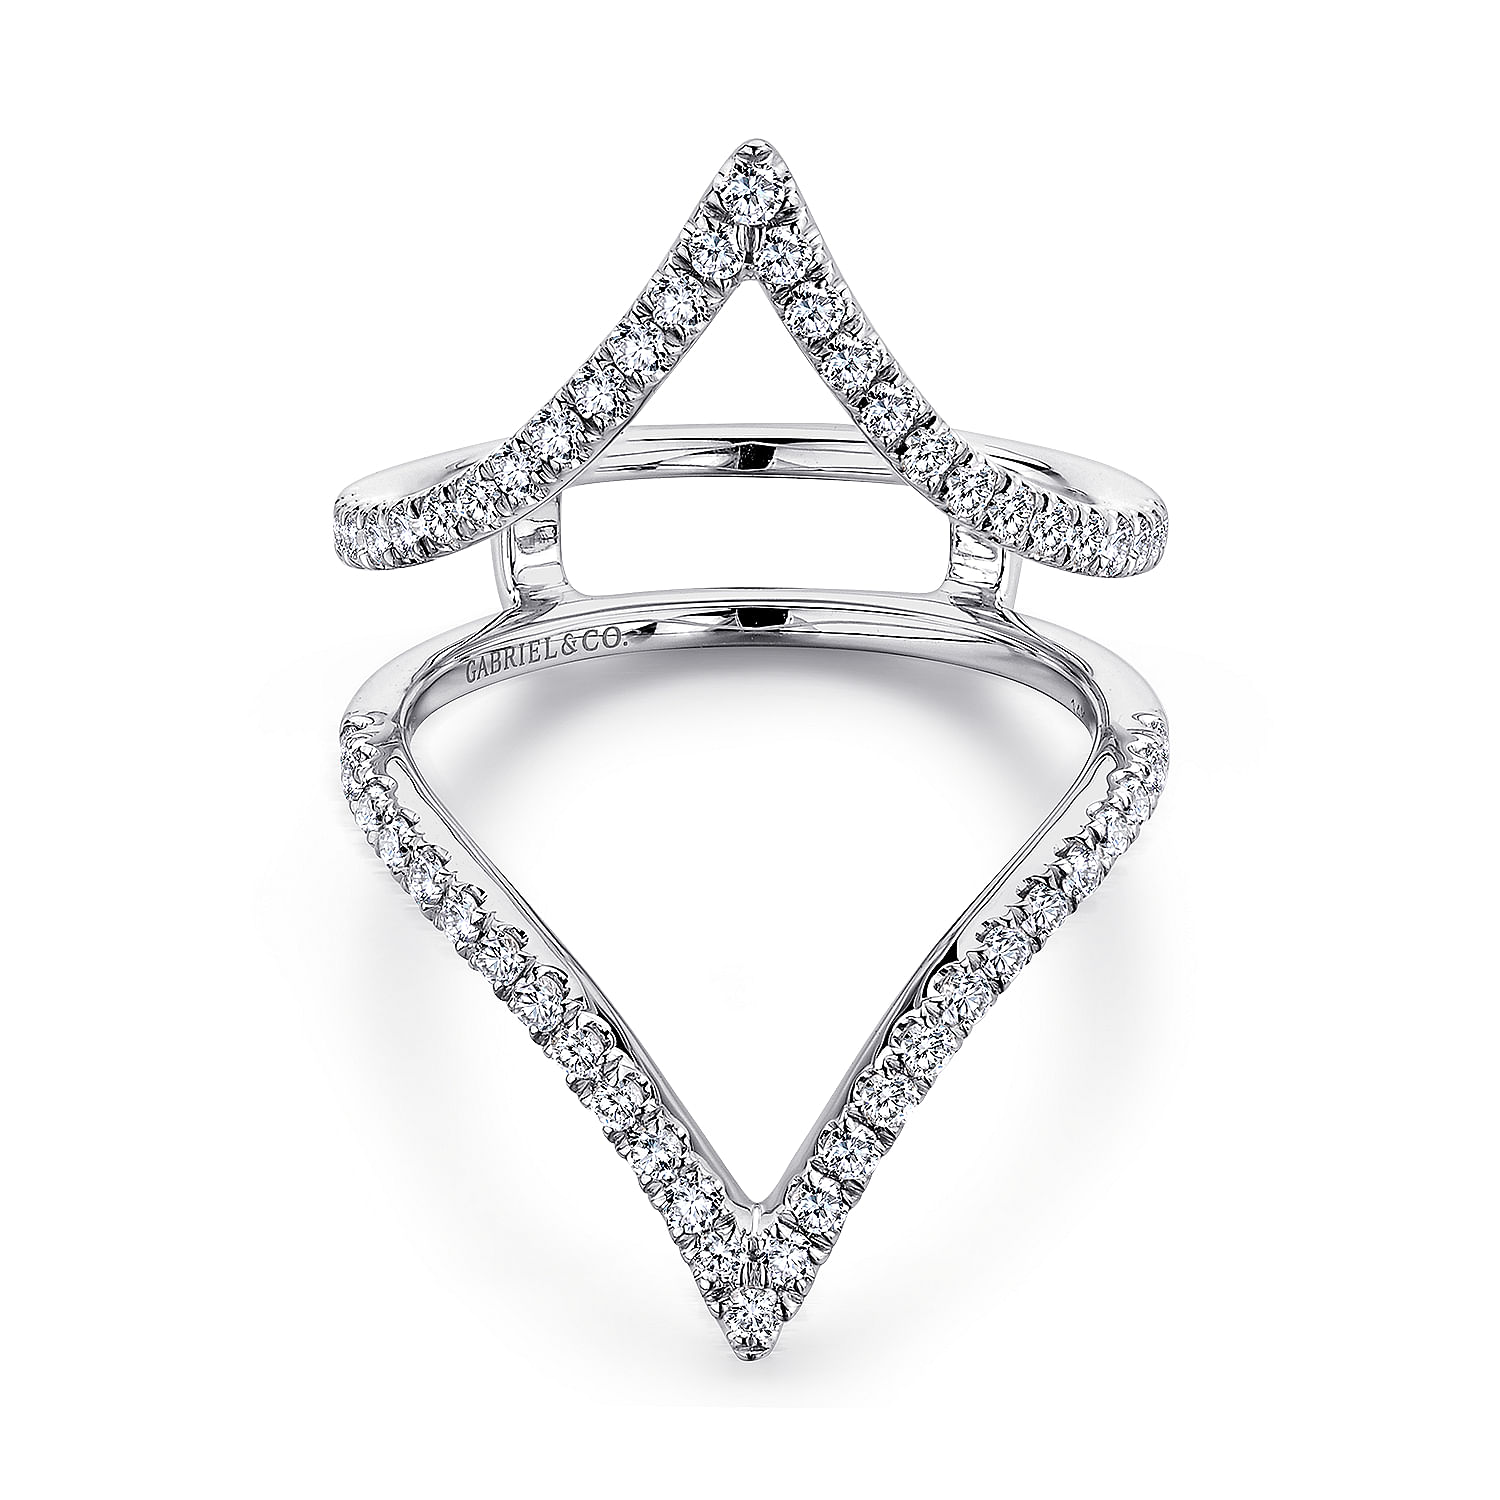 Triangular 14K White Gold French Pavé Set Diamond Ring Enhancer